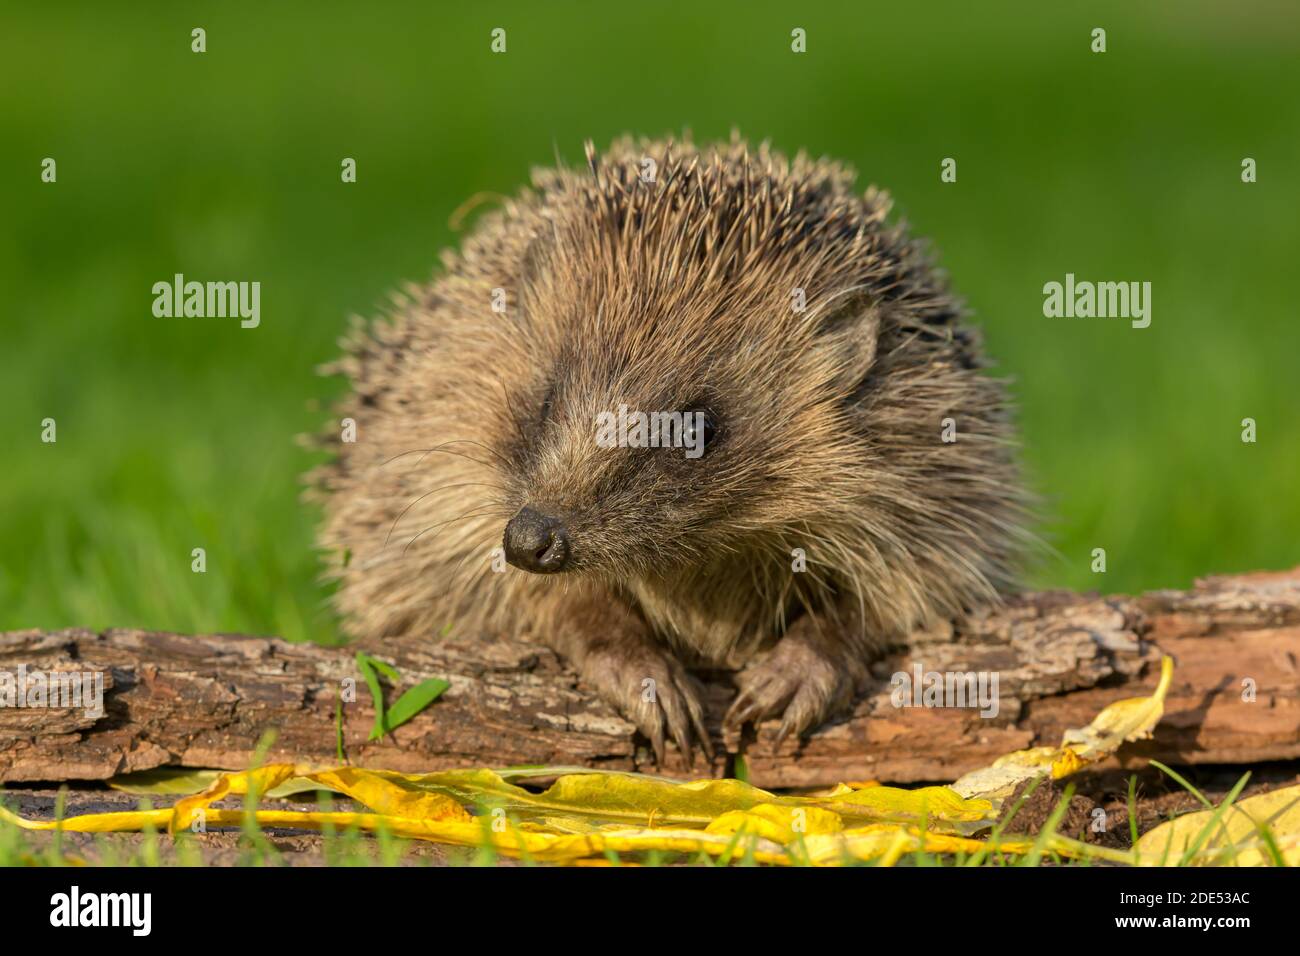 Hedgehog, Scientific name: Erinaceus Europaeus.  Wild, native, European hedgehog facing forward with paws on a fallen log.  Clean, green background. Stock Photo